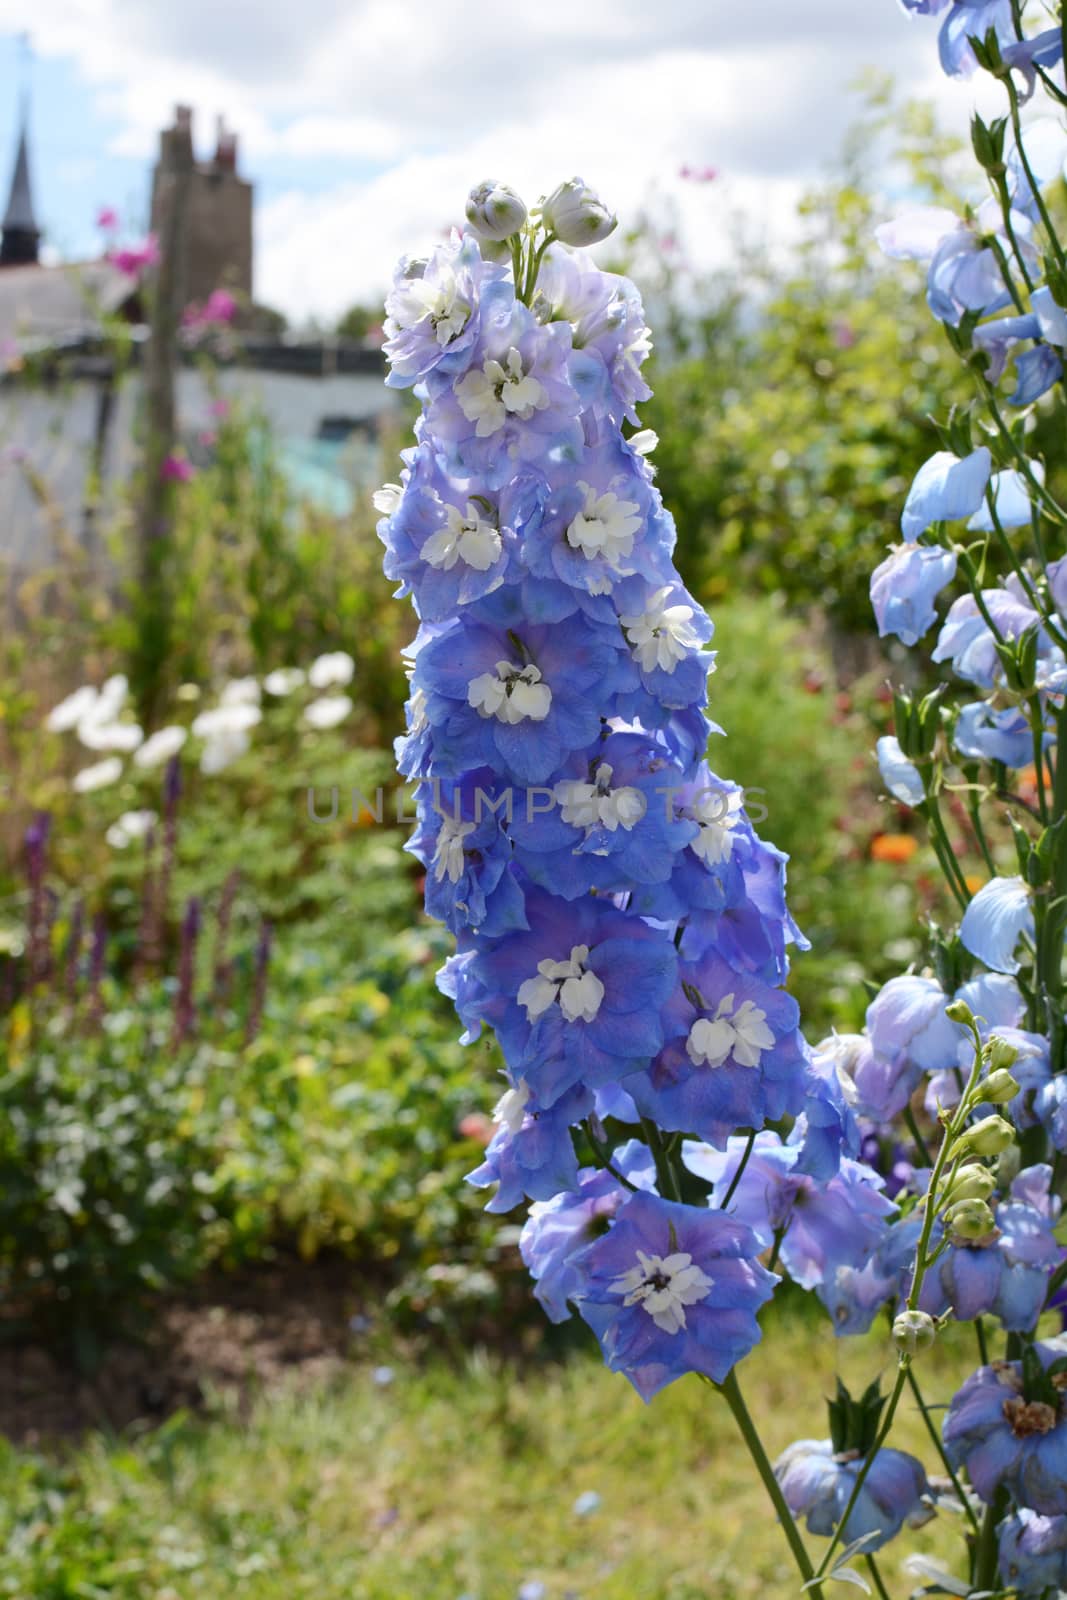 Light blue delphinium flowers against a rural flower garden by sarahdoow